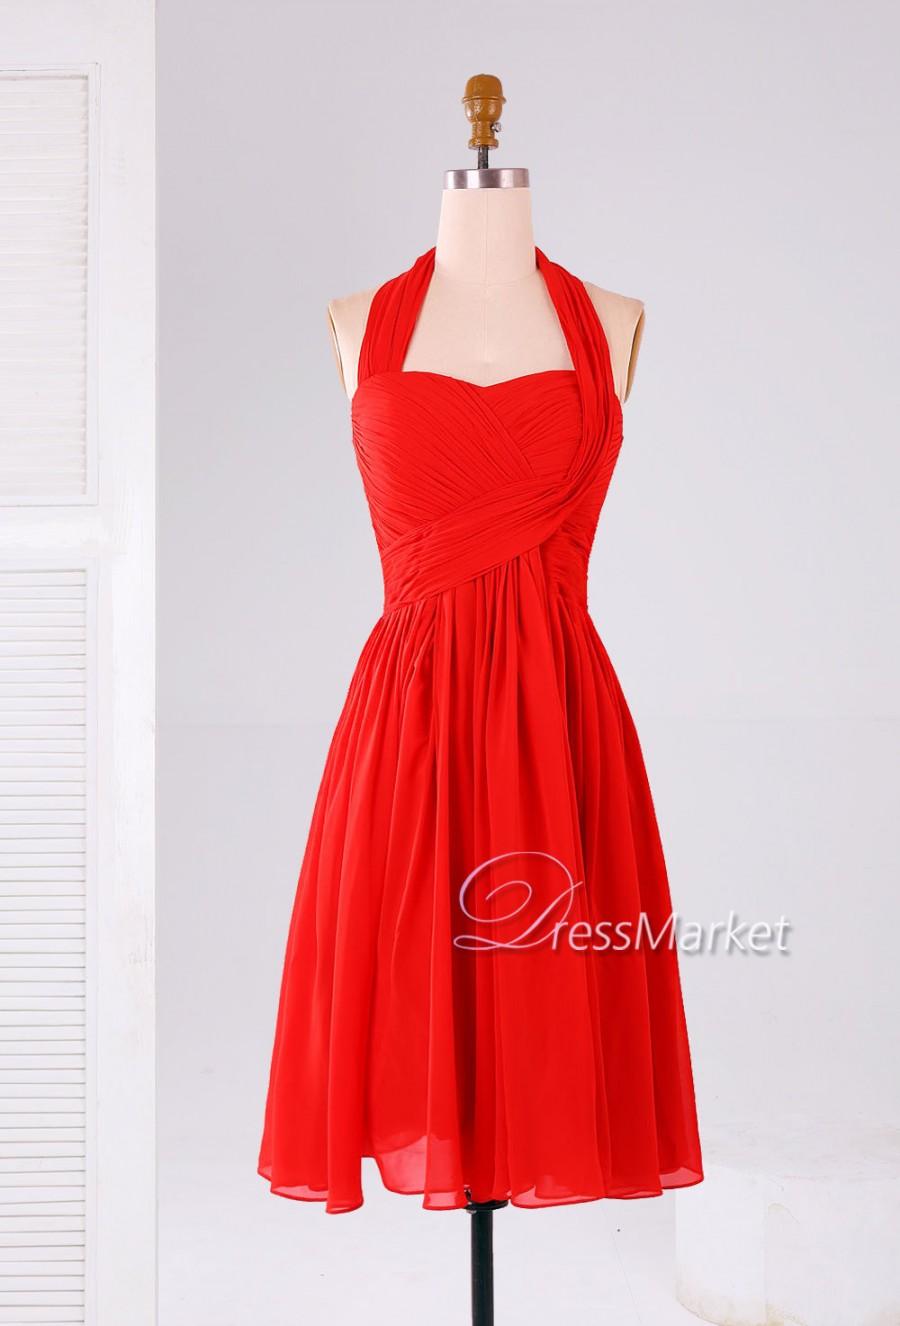 Mariage - Red Sweetheart Short chiffon Bridesmaid dress,Short red chiffon homecoming dress,Short wedding party dress,Short prom dress,DressMarket075